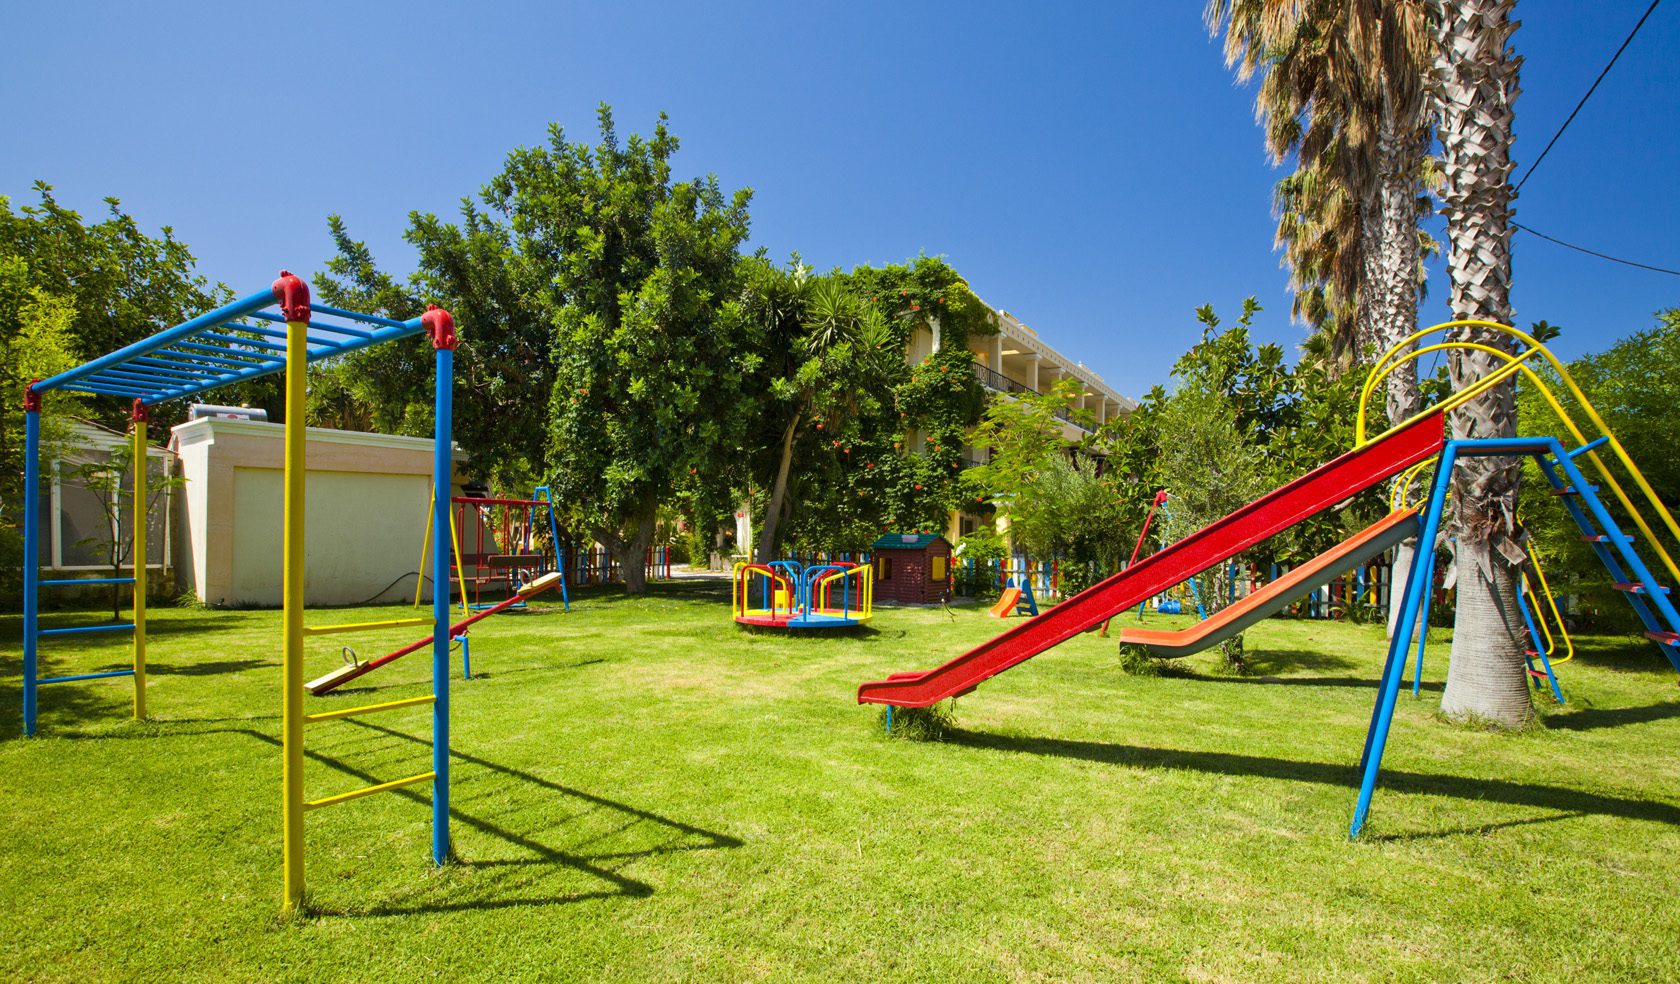 Is playground equipment dangerous to your children?